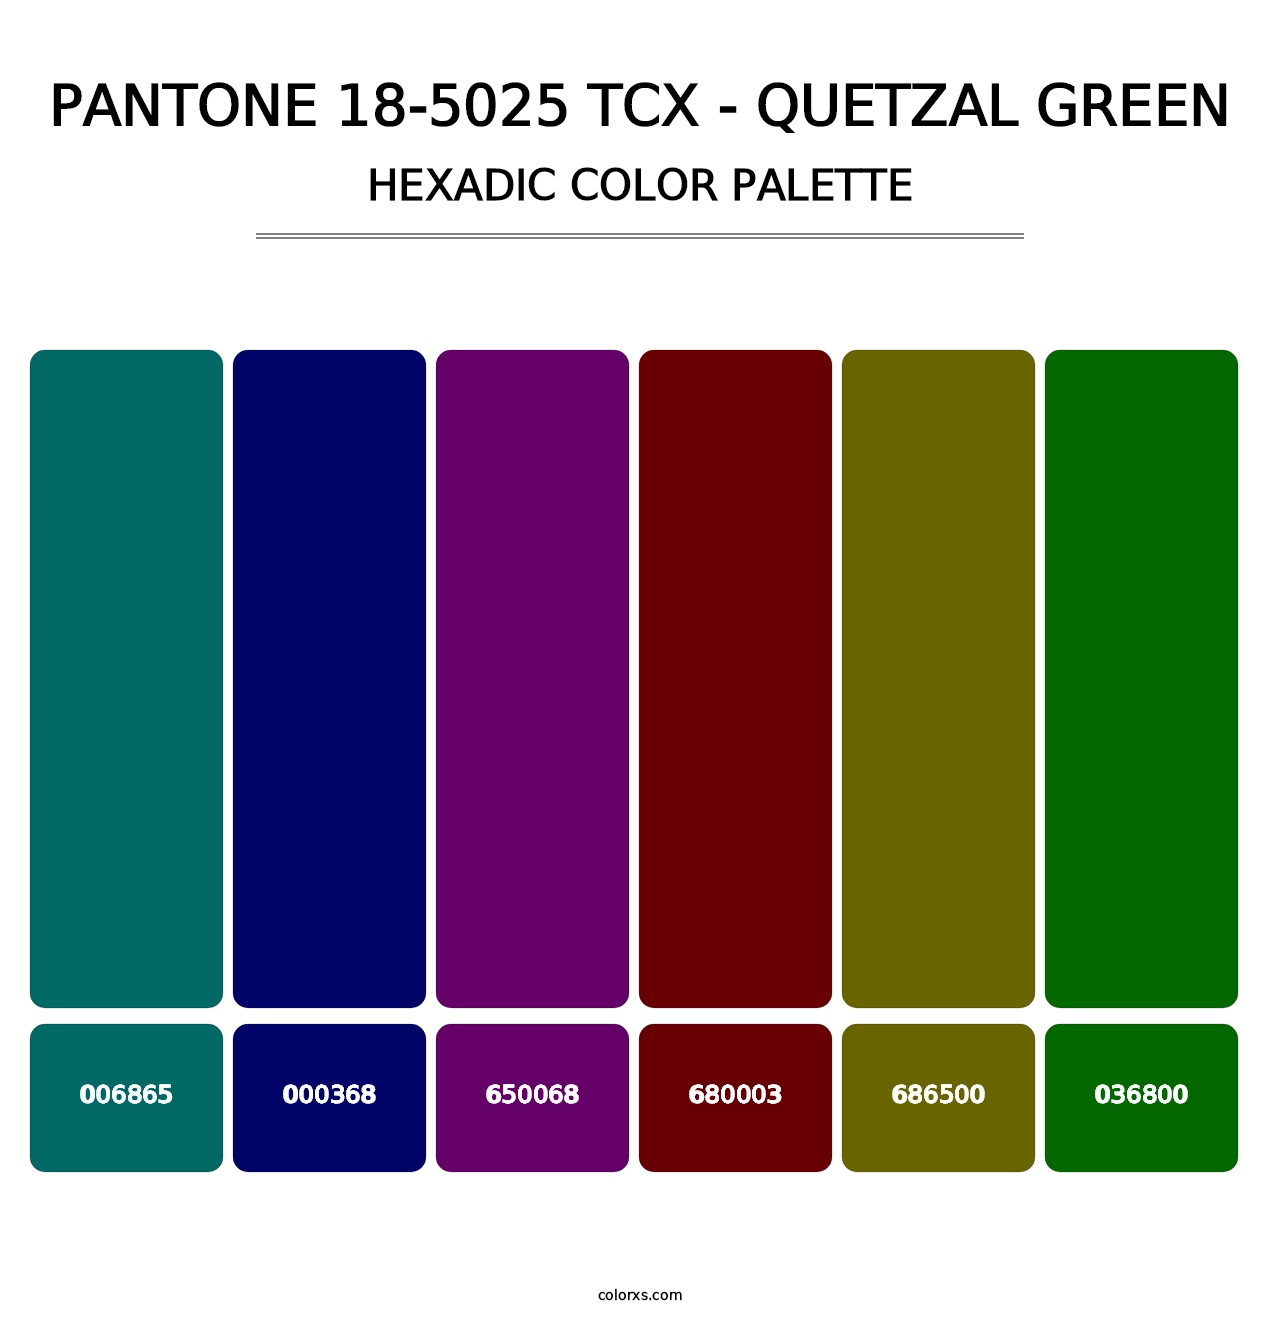 PANTONE 18-5025 TCX - Quetzal Green - Hexadic Color Palette